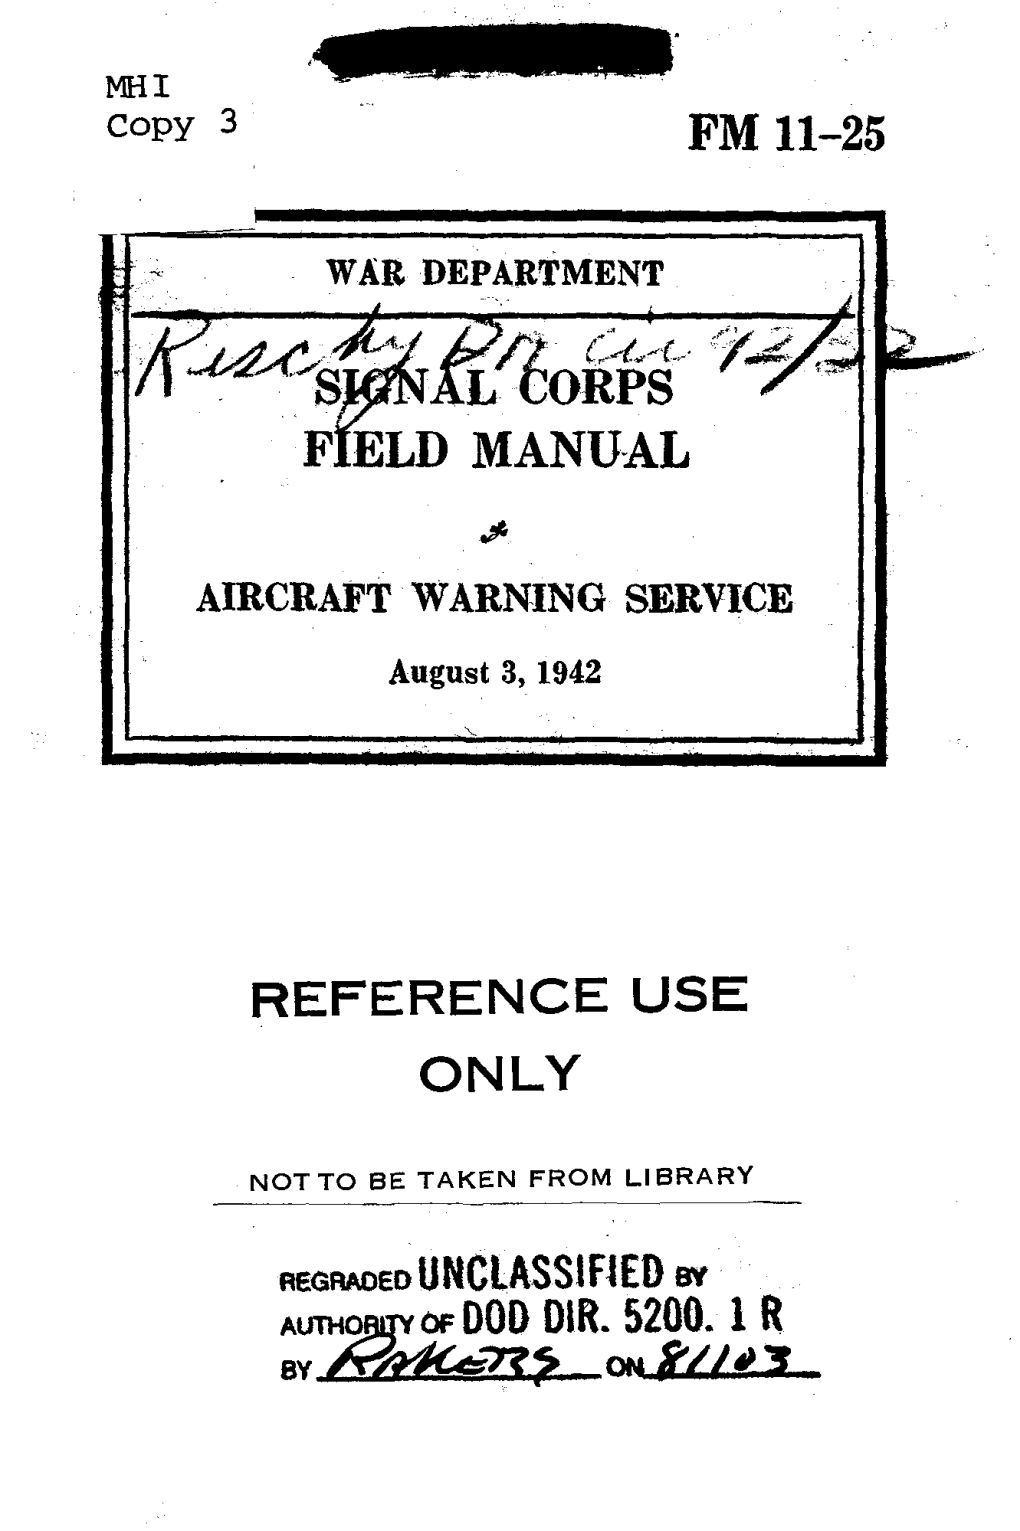 FM 11-25 Signal Corps Field Manual Aircraft Warning Service